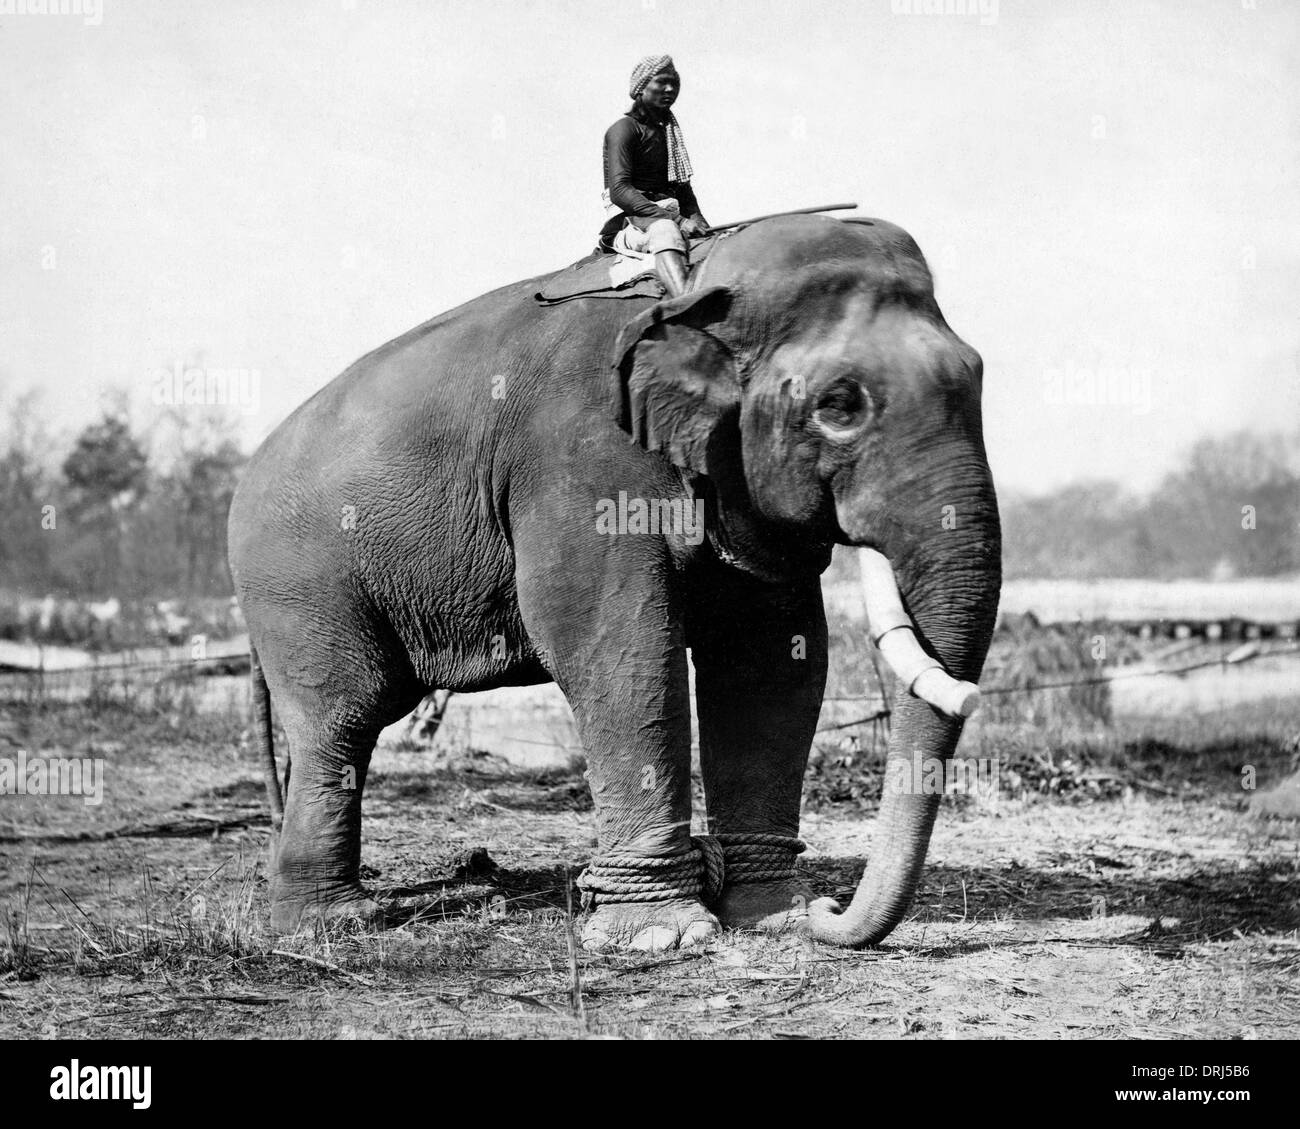 Working Elephant With Rider India Stock Photo Alamy